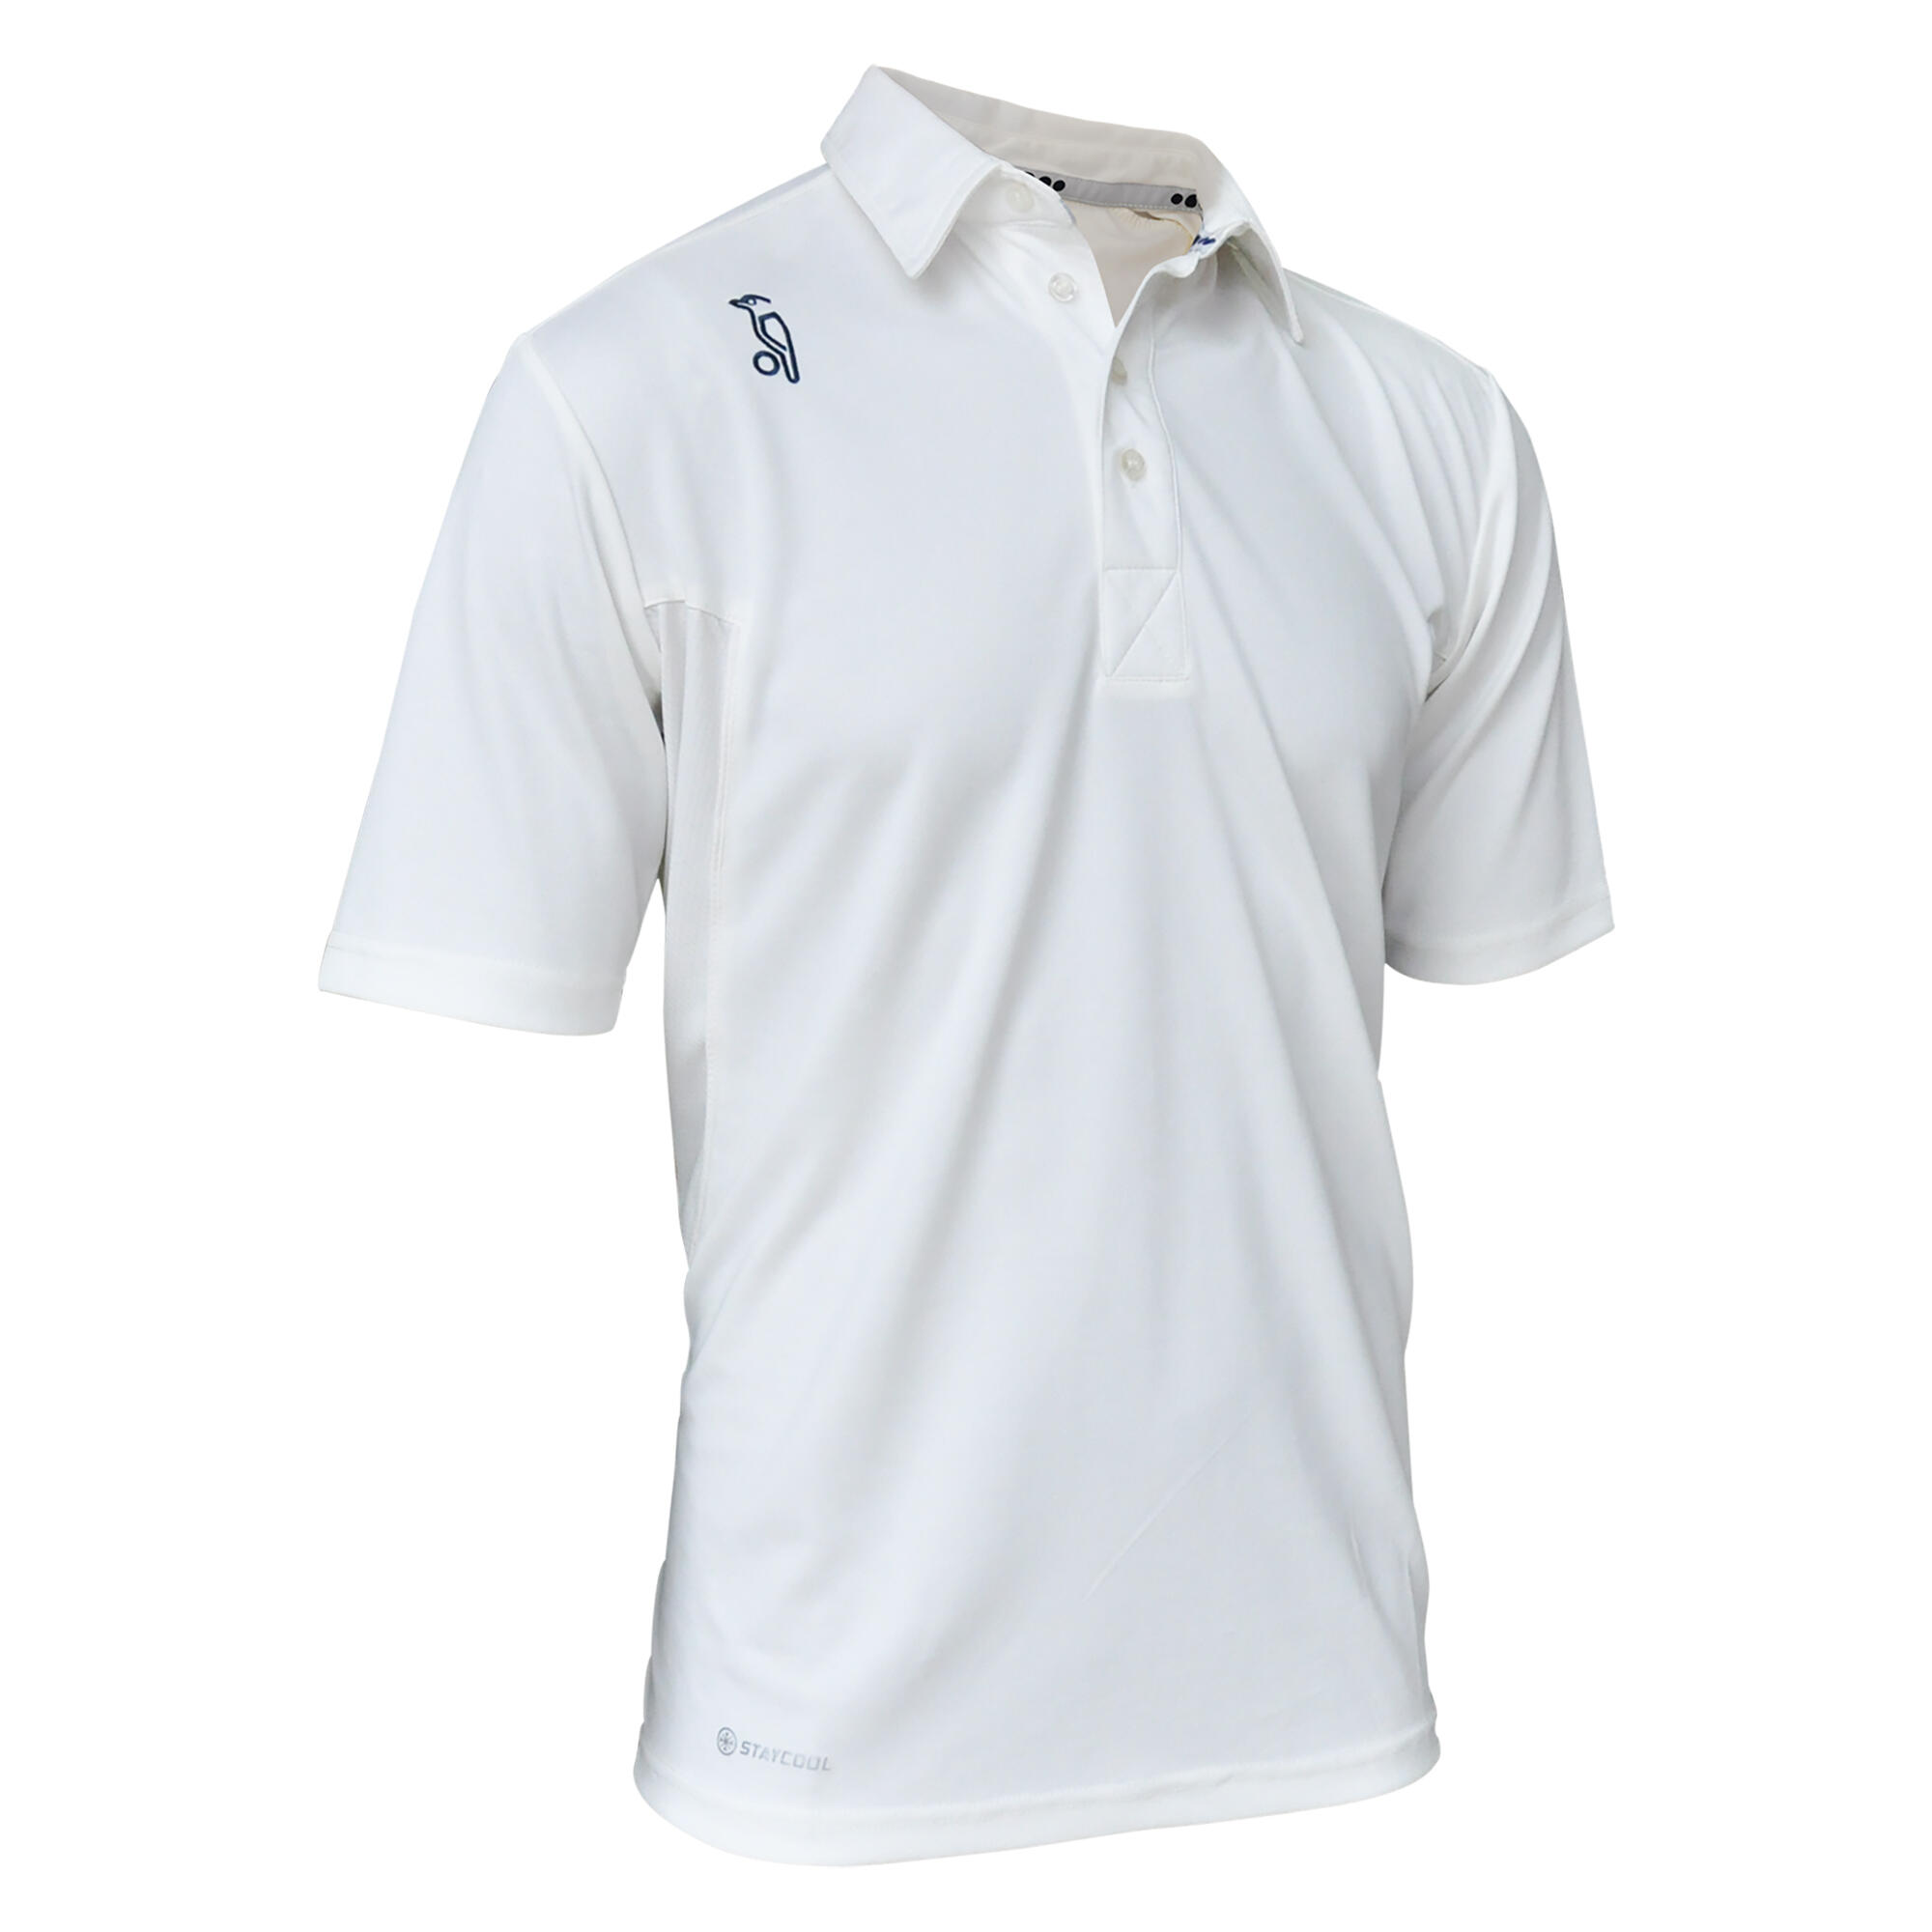 KOOKABURRA Kookaburra Pro Player Adult Cricket Shirt White